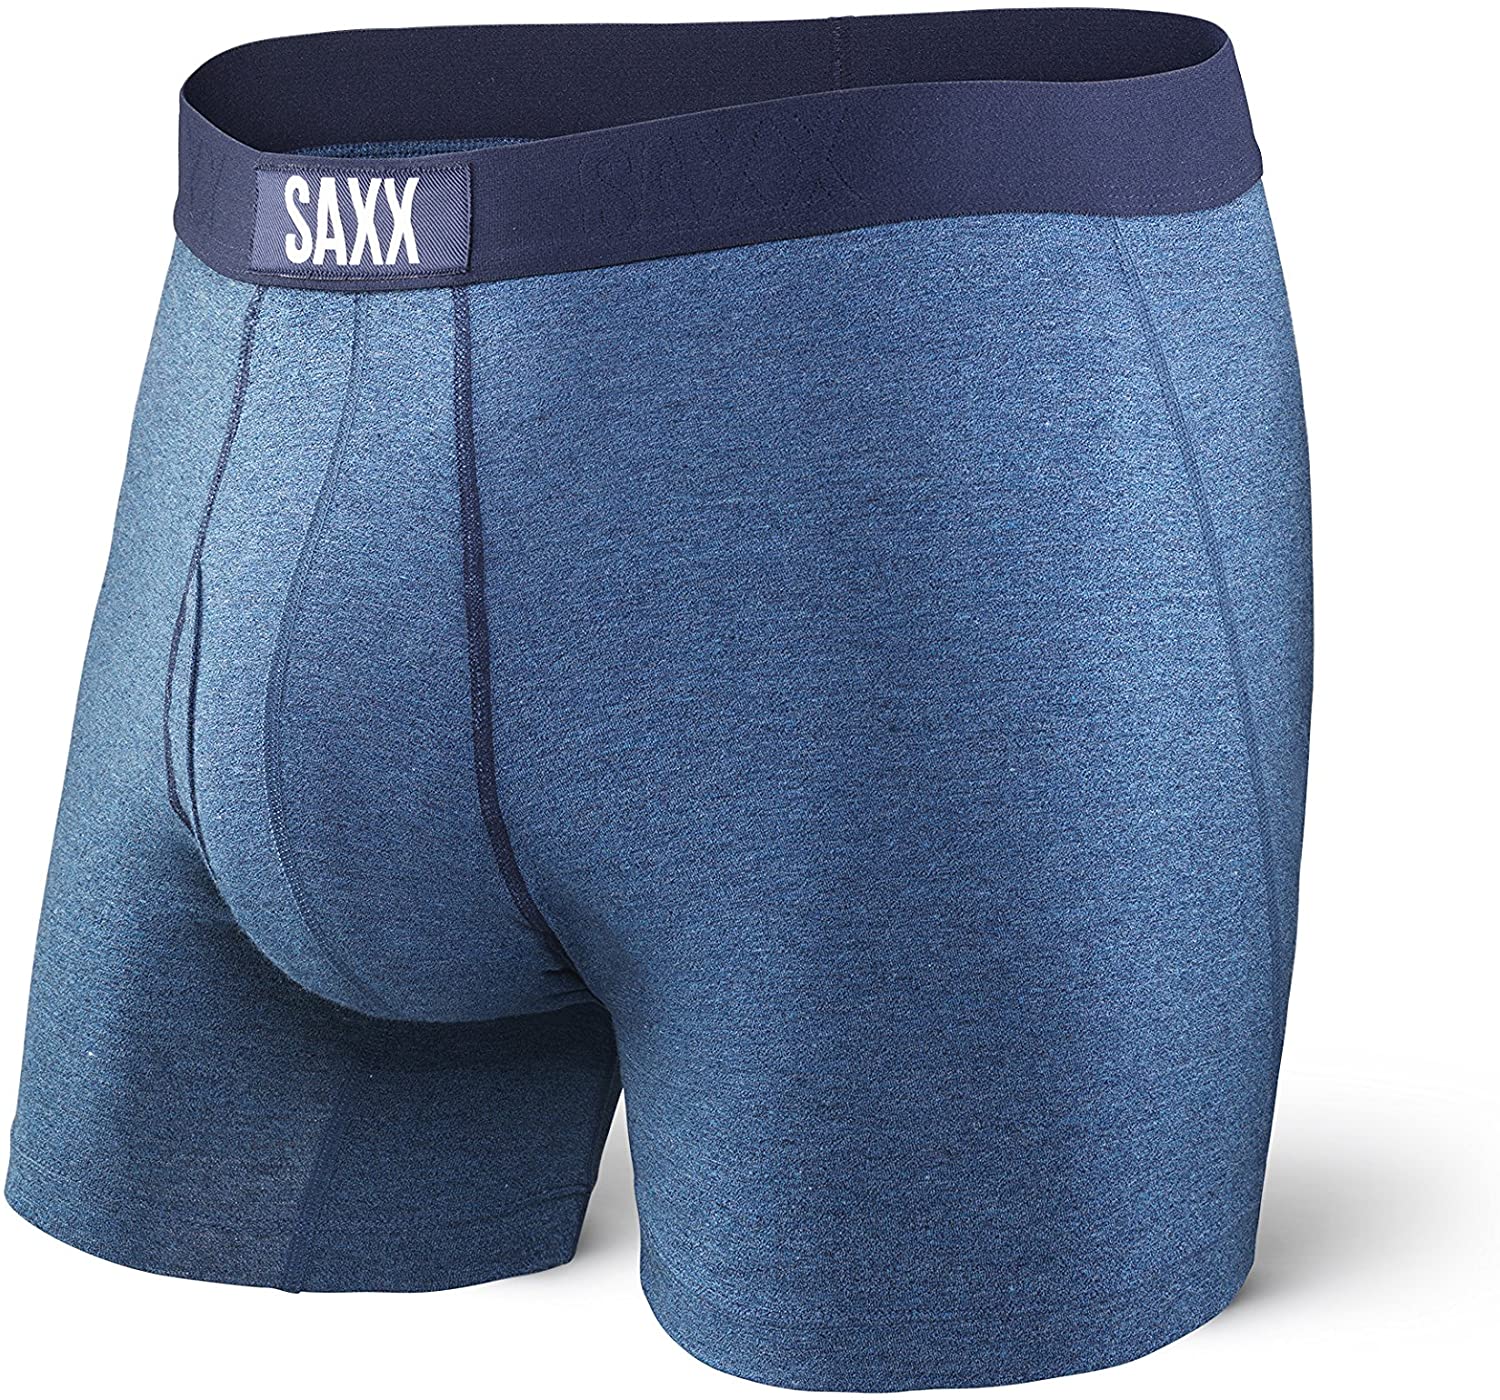 Underwear for Men Saxx Underwear Mens Boxer Briefs Ultra Boxer Briefs with Fly and Built-in Ballpark Pouch Support 